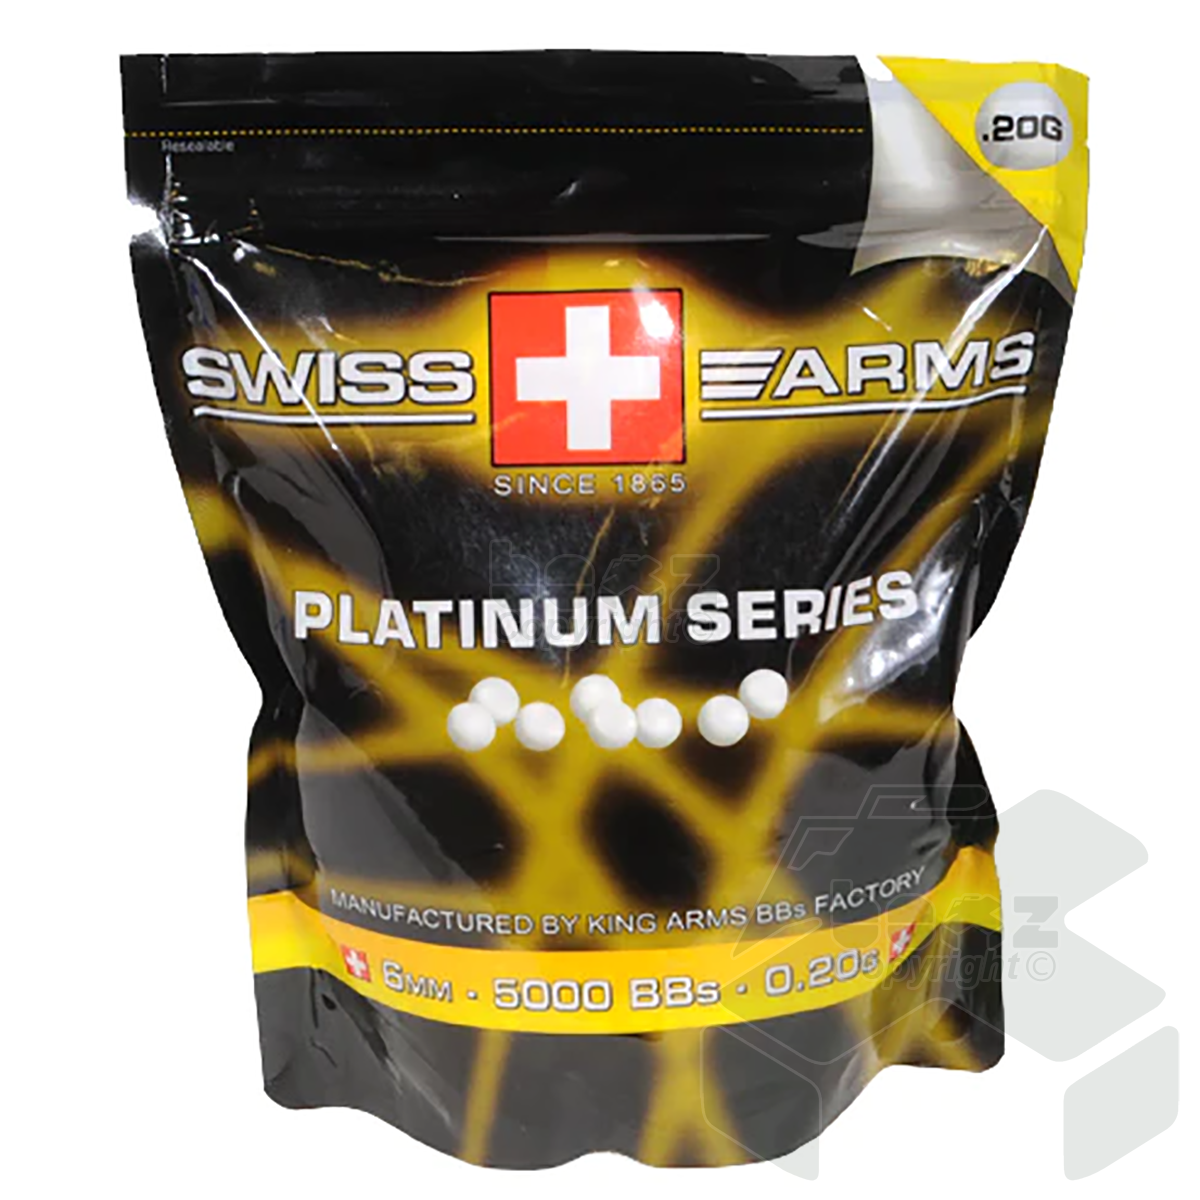 Swiss Arms Platinum Series BB's 0.20g White BBs 1kg 5000pk